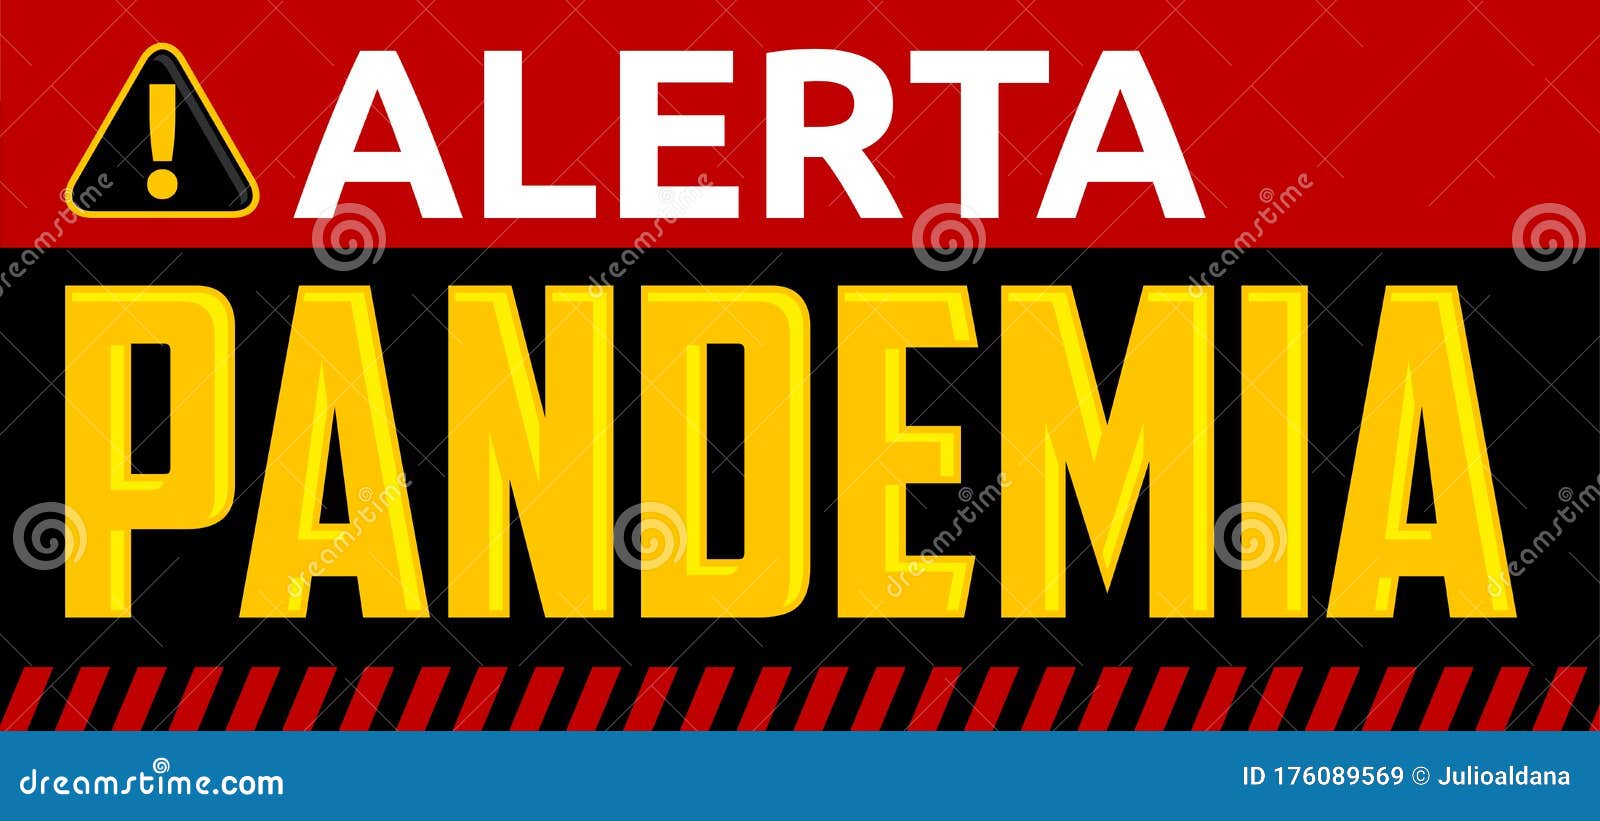 alerta pandemia, alert pandemic spanish text  .